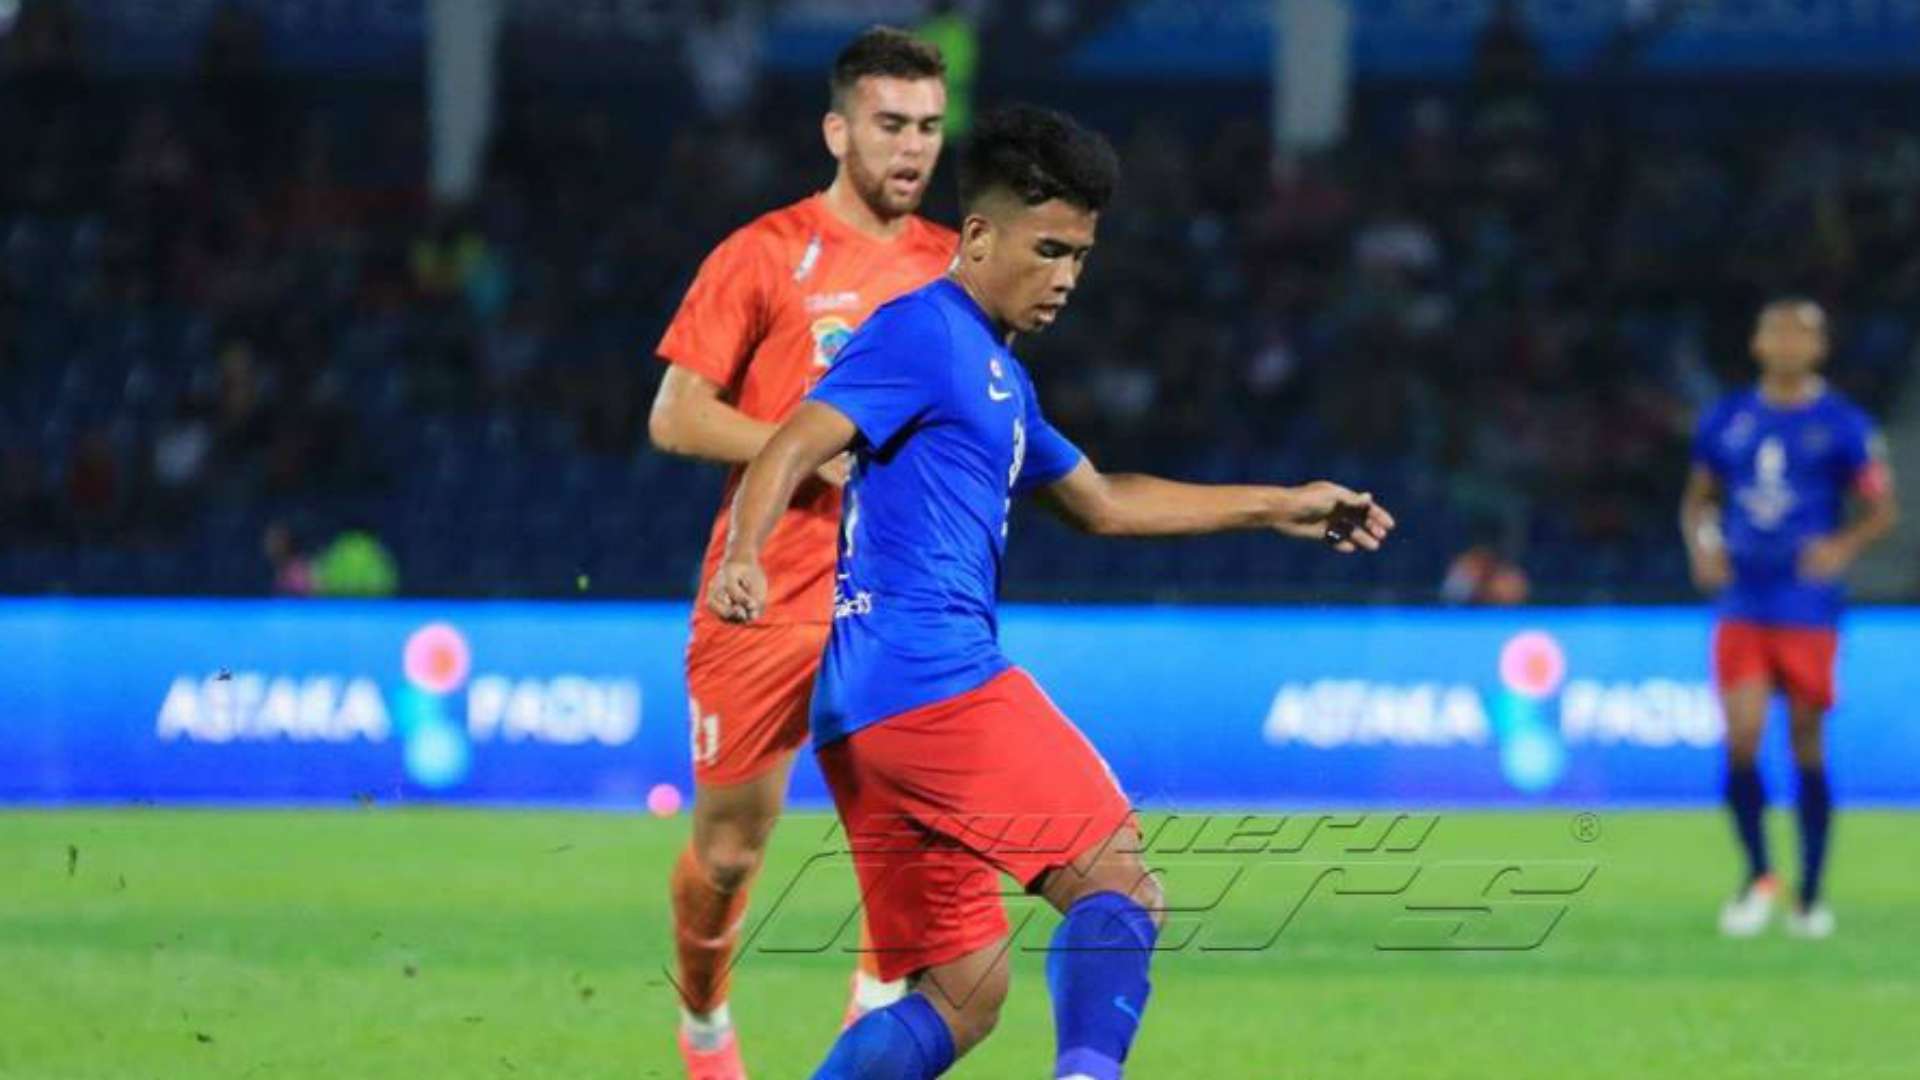 Safawi Rasid, Johor Darul Ta'zim, Lucas Espindola, PKNS FC, Super League, 15/04/2017